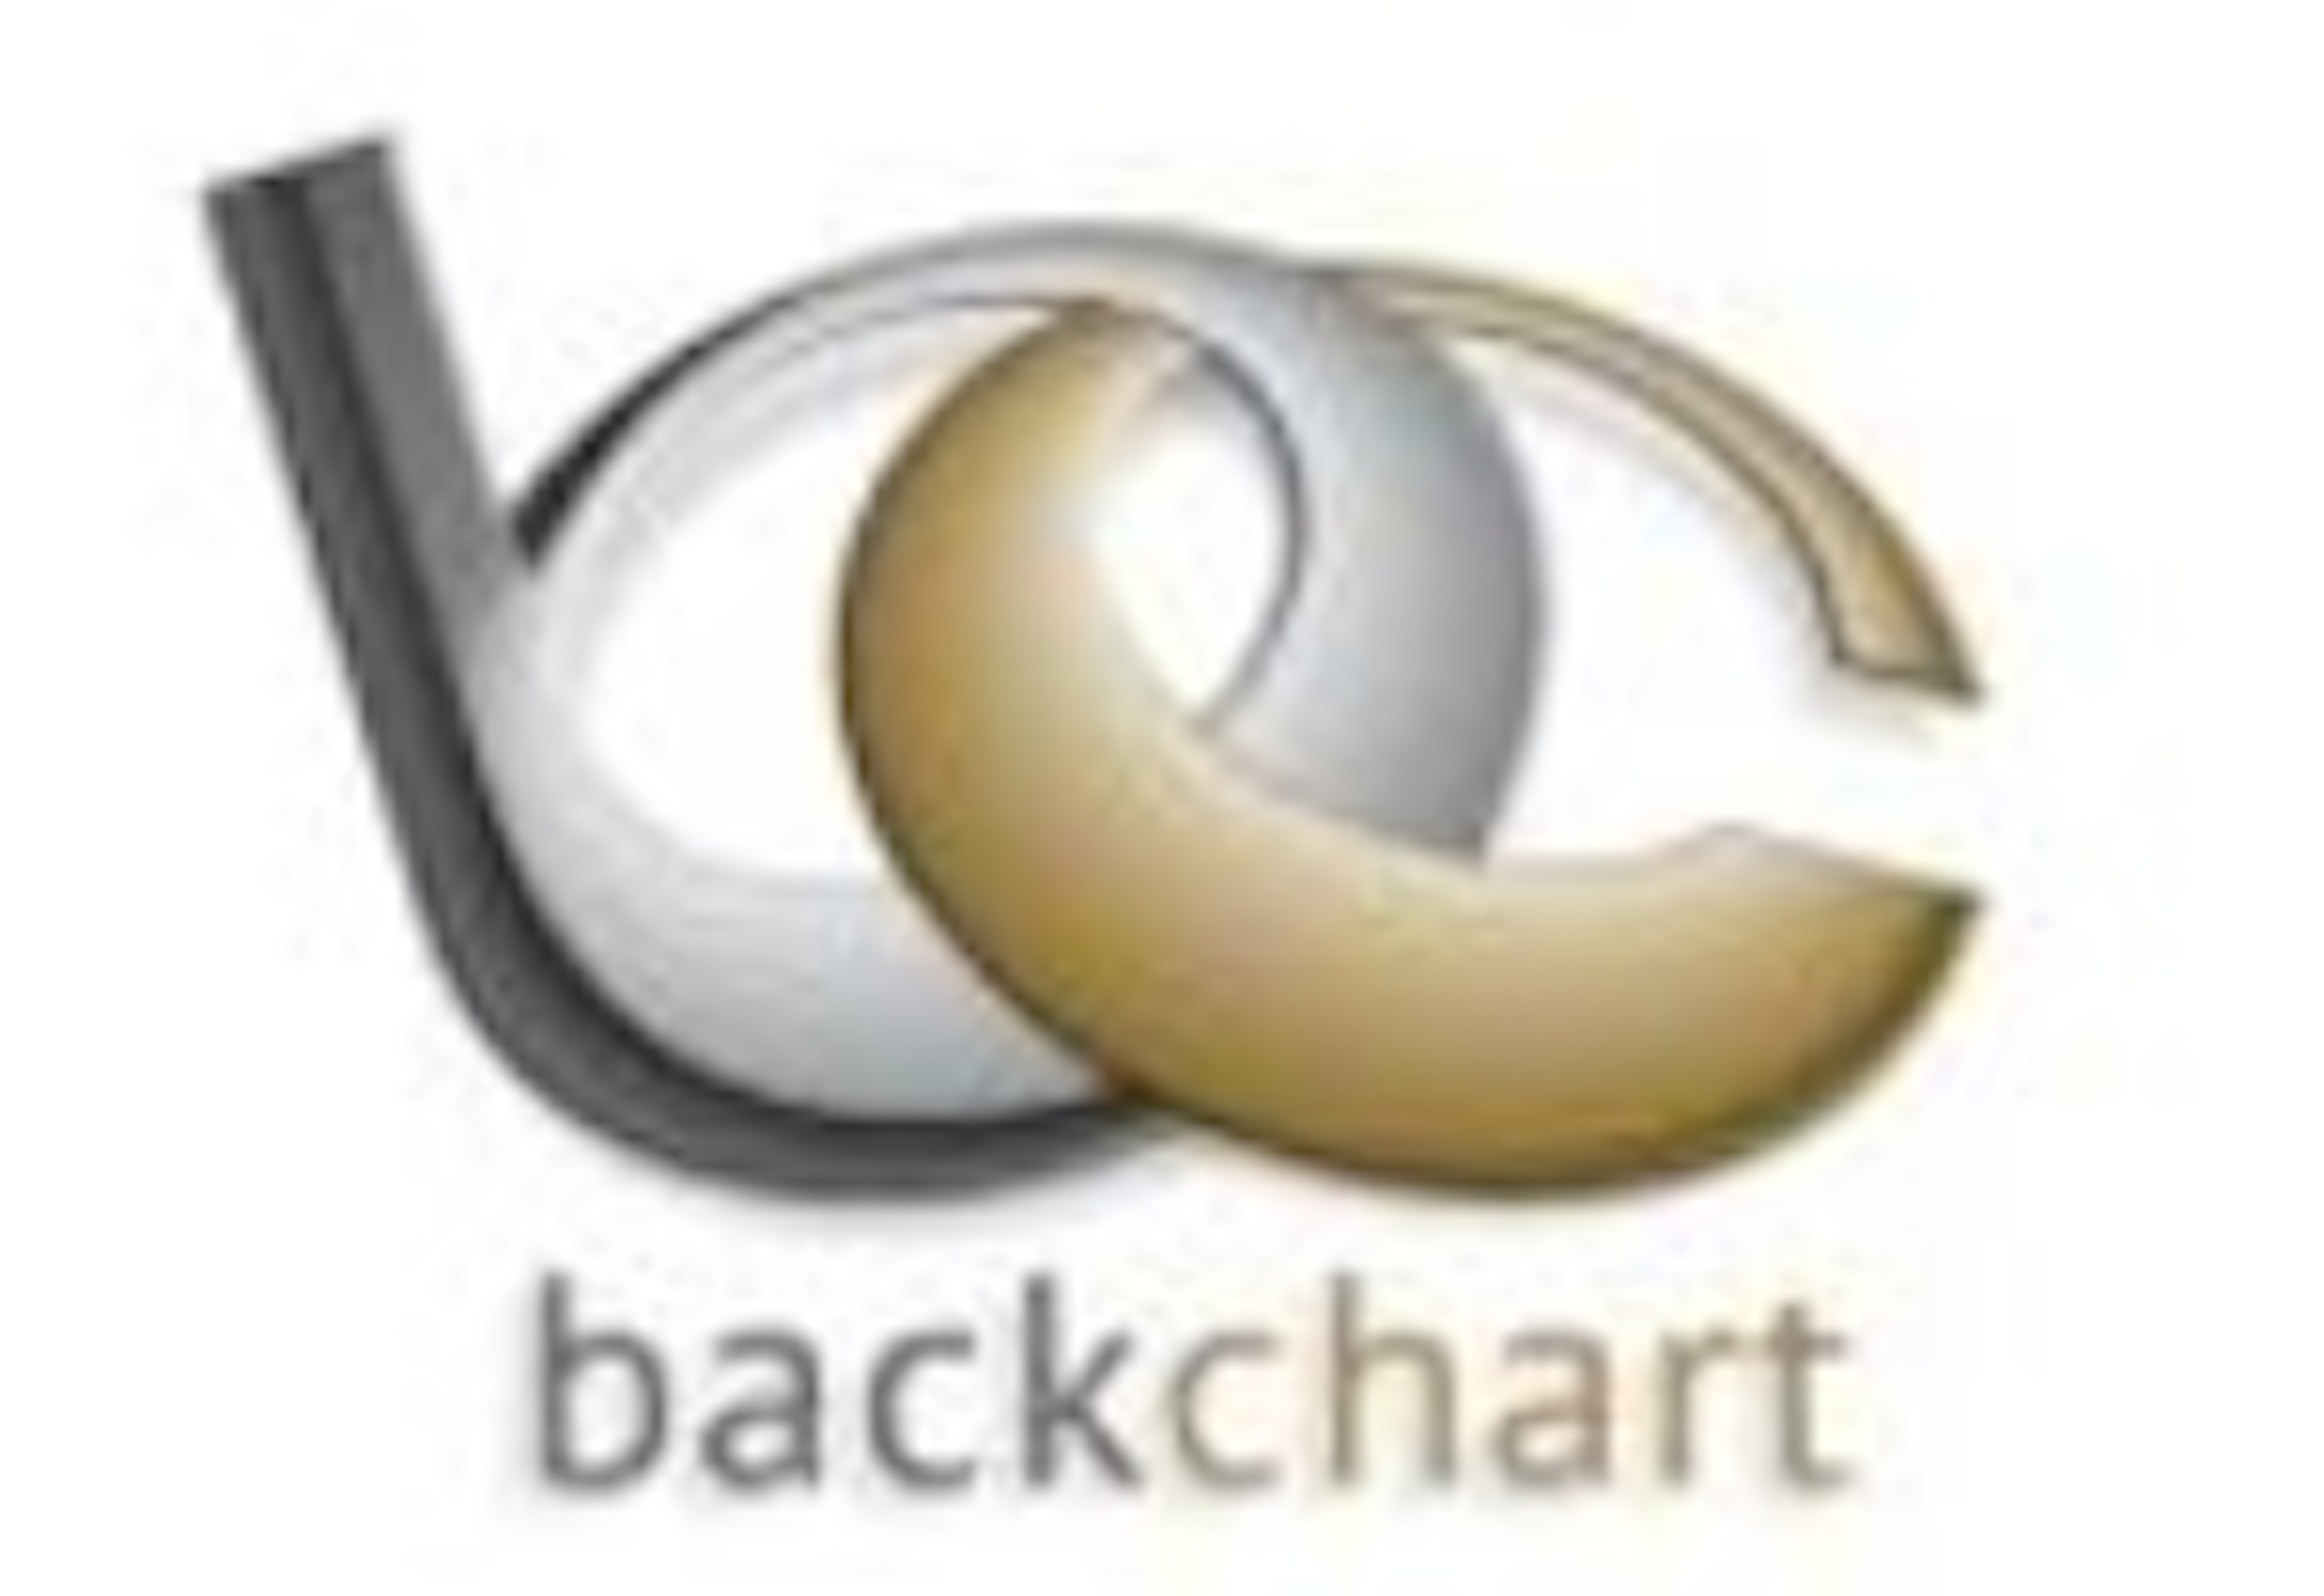 BackChart Logo